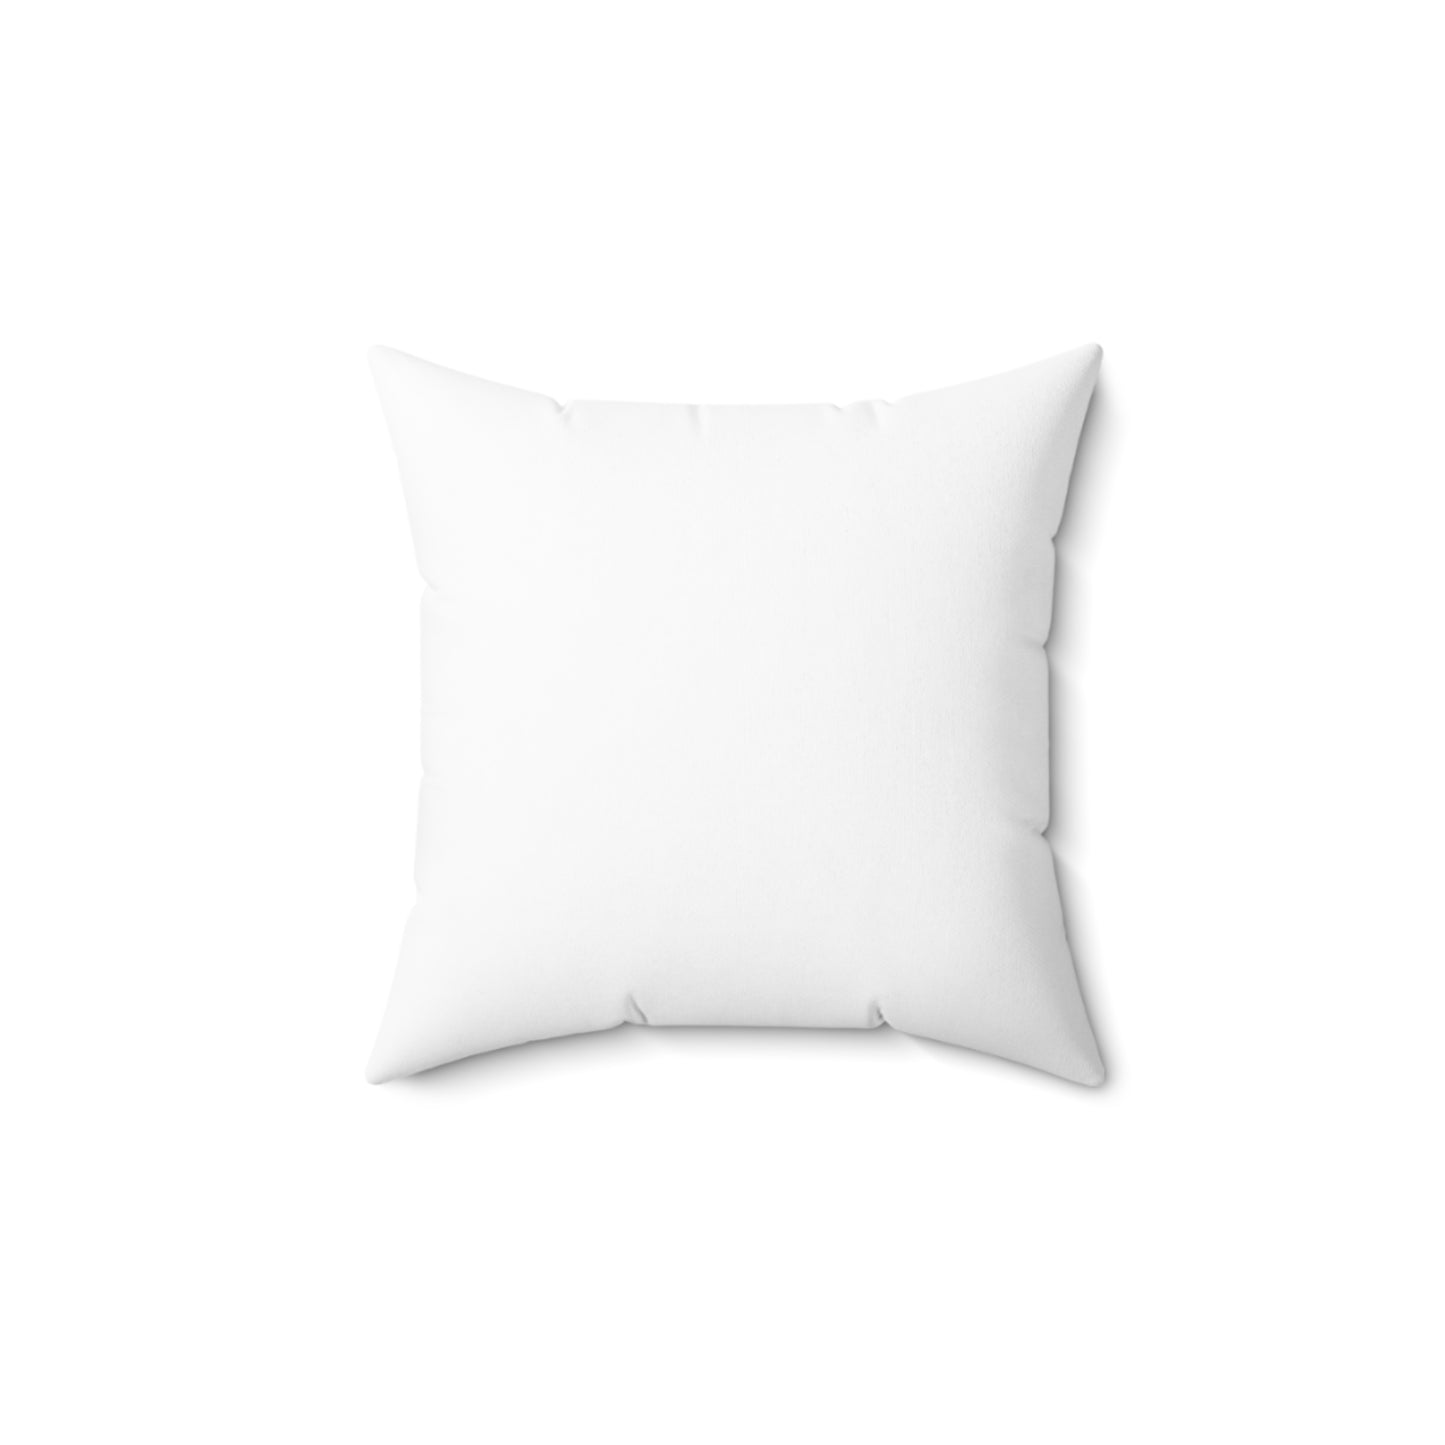 Bless Your Heart - Spun Polyester Square Pillow | Southern Sayings Decor | Housewarming Gift | Throw Pillow | Farmhouse Pillow